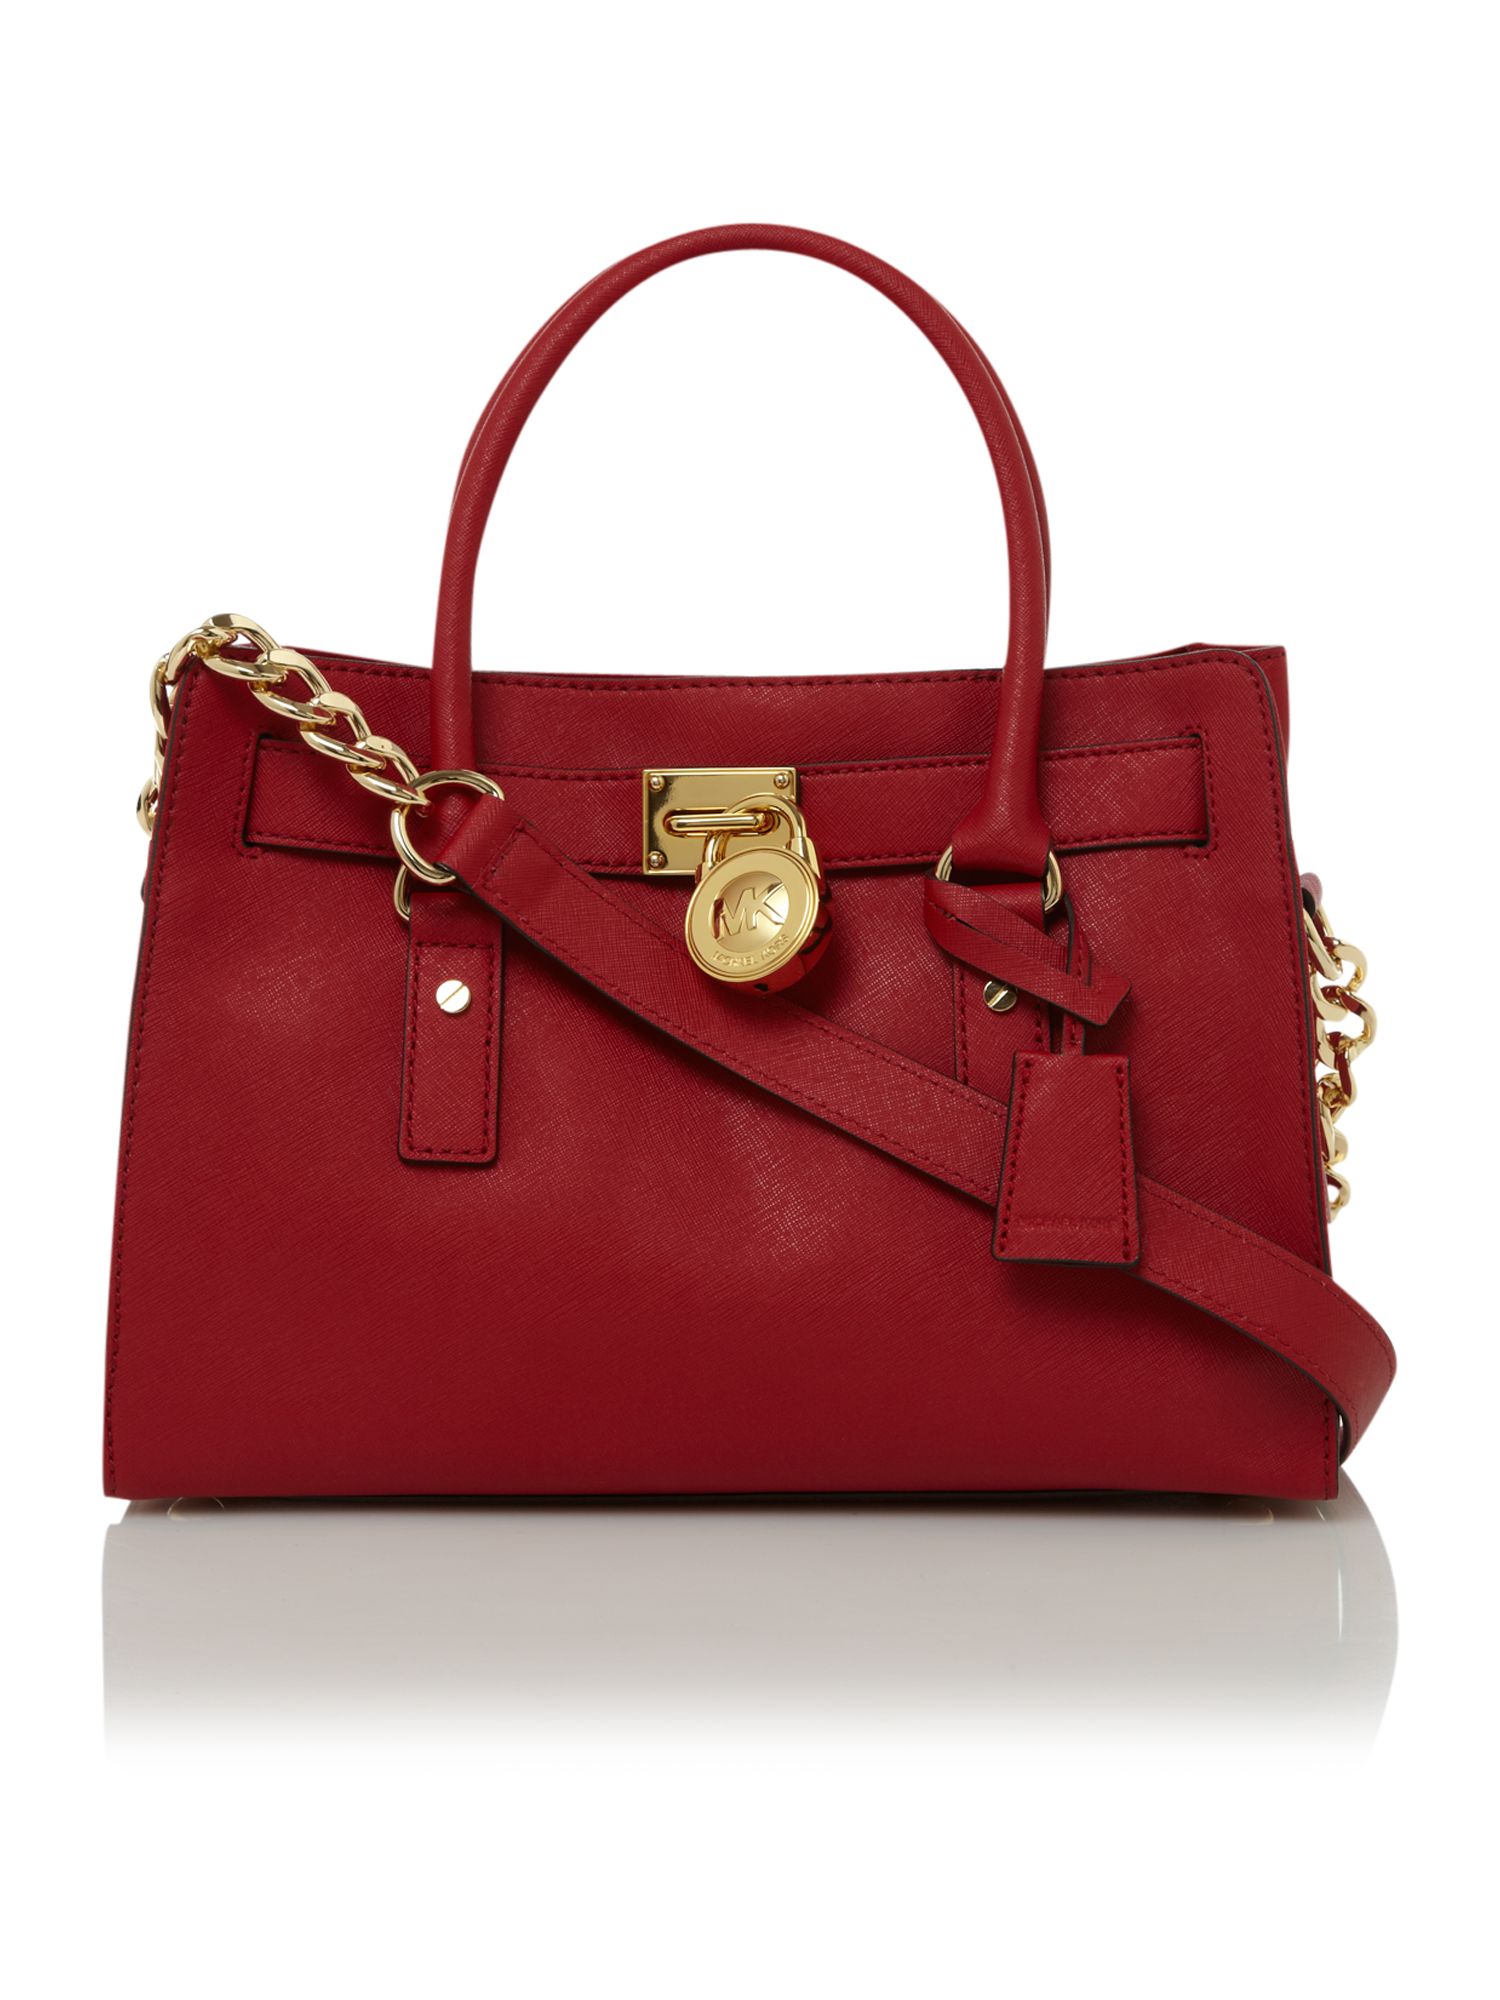 Michael Kors Red Handbag | semashow.com